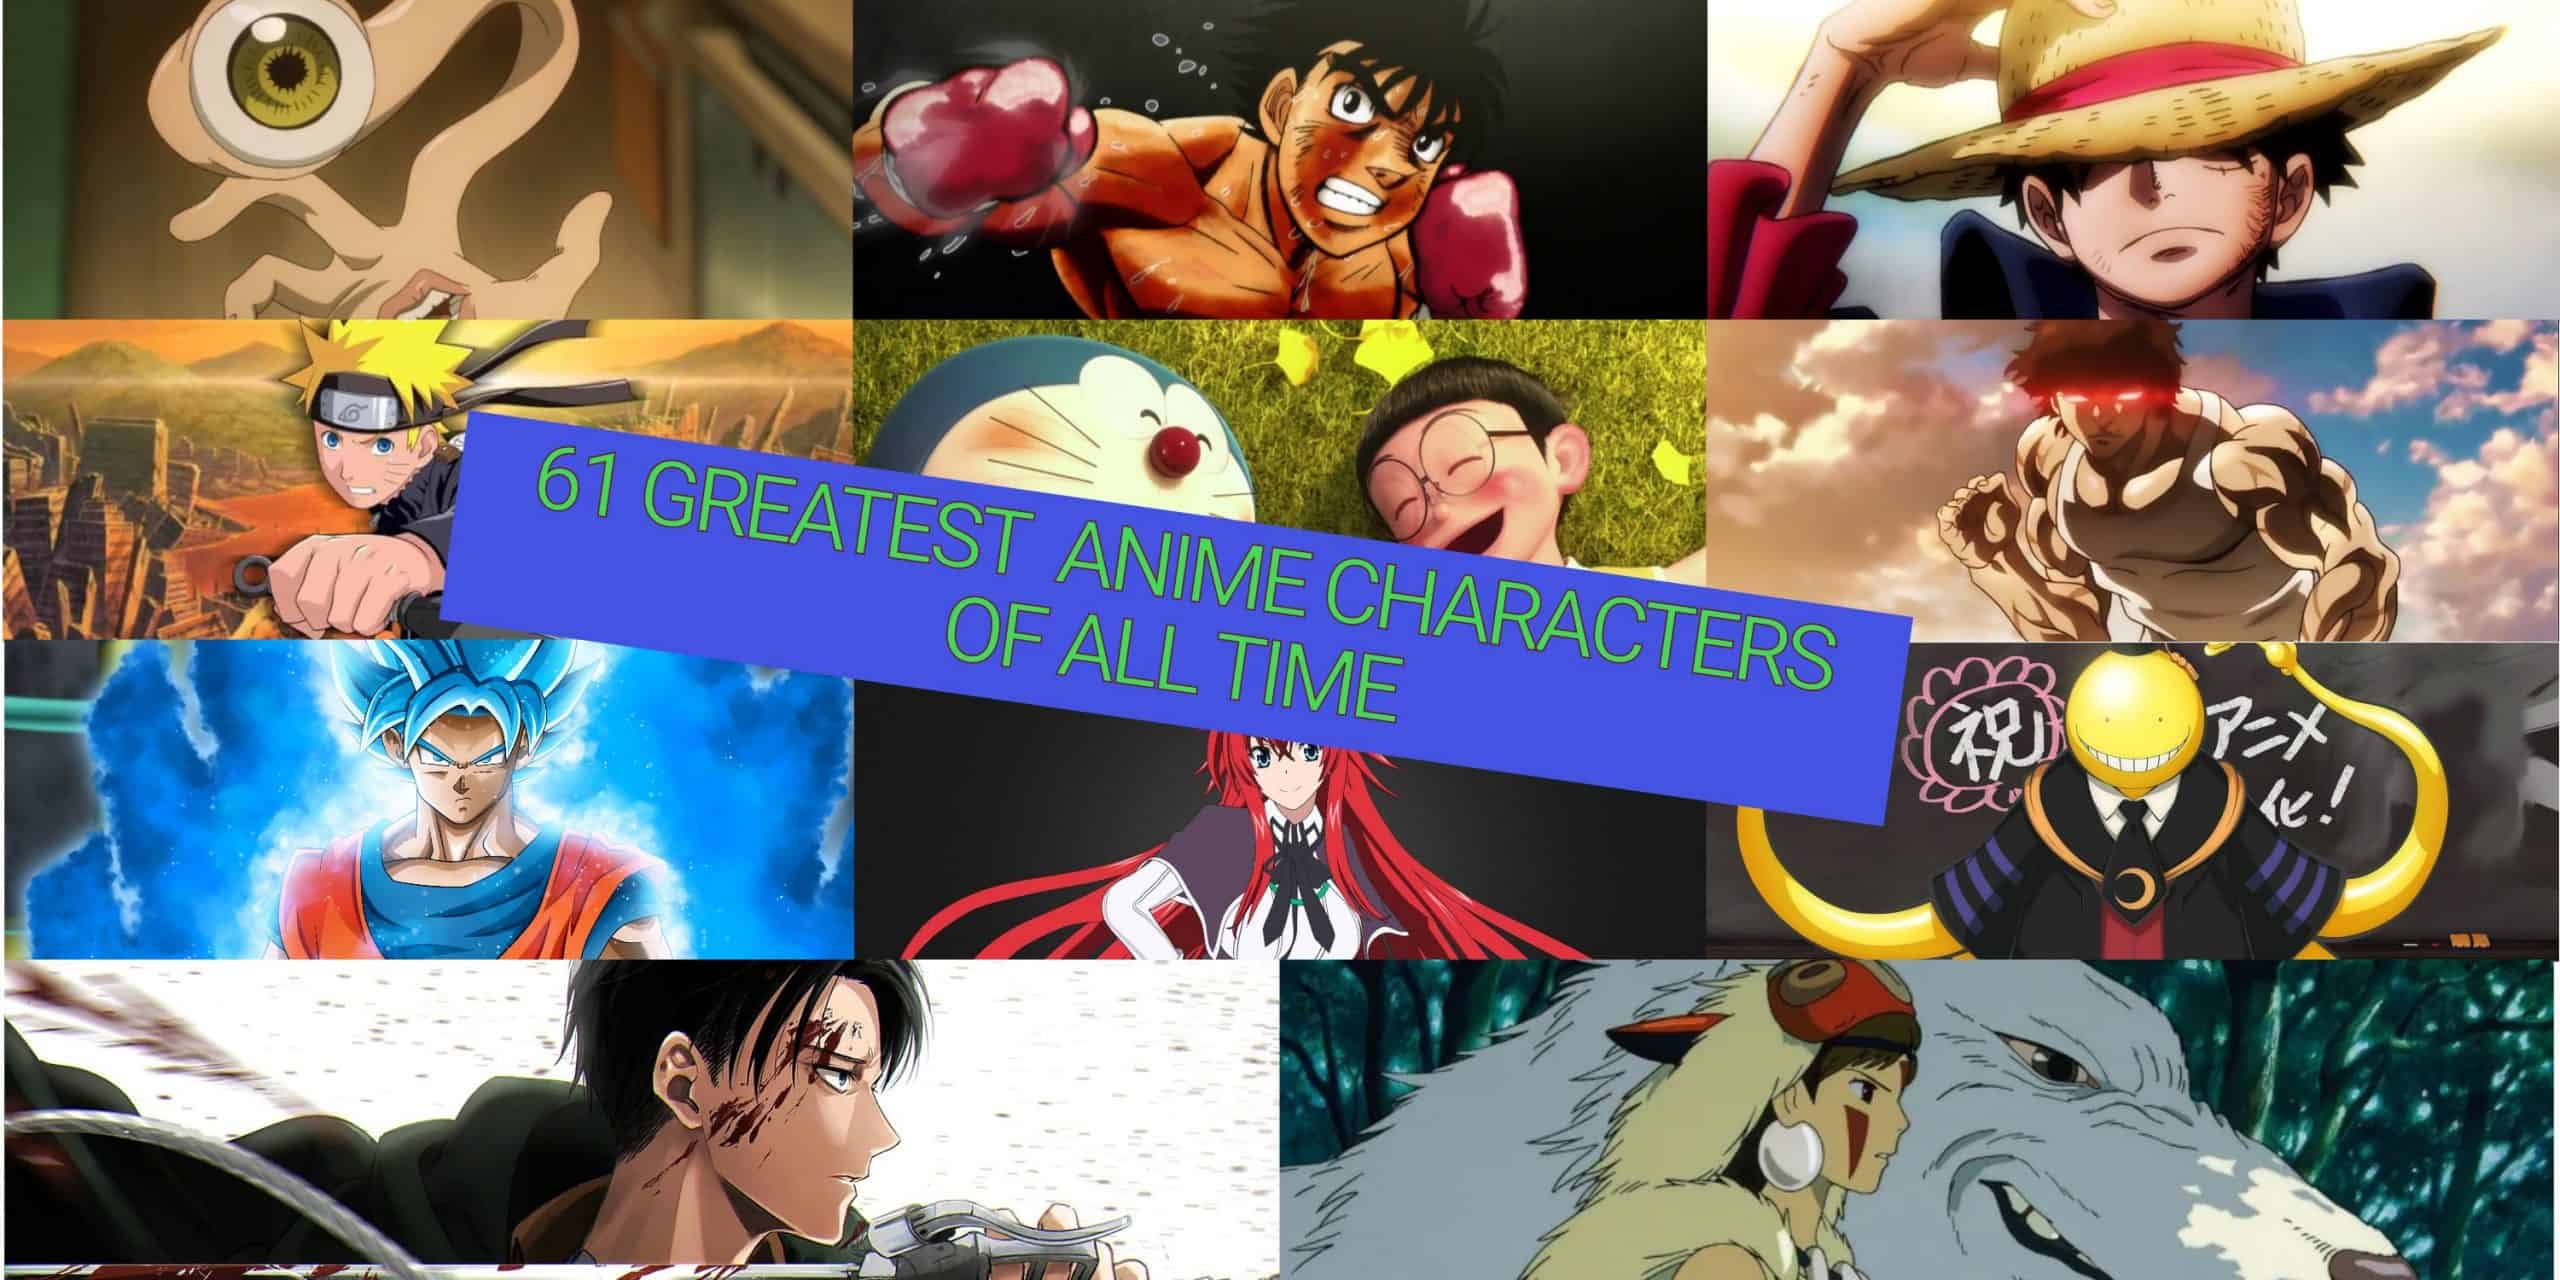 Top 25 Strongest Baki Characters - BiliBili